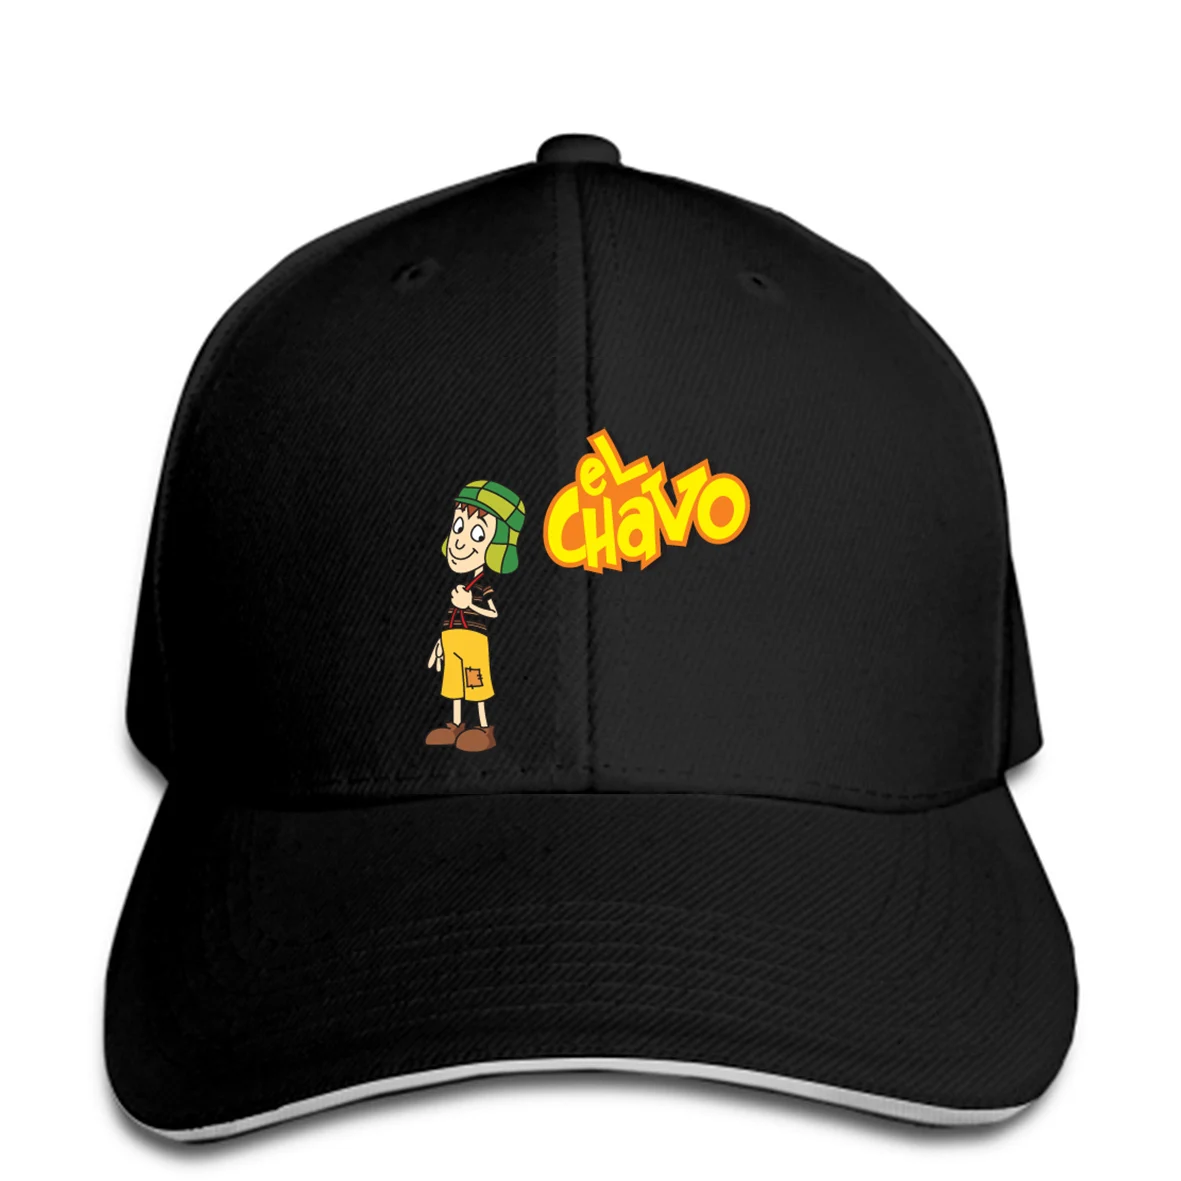 Baseball Cap Chavo Del 8 logo Hat Peaked cap _ - AliExpress Mobile